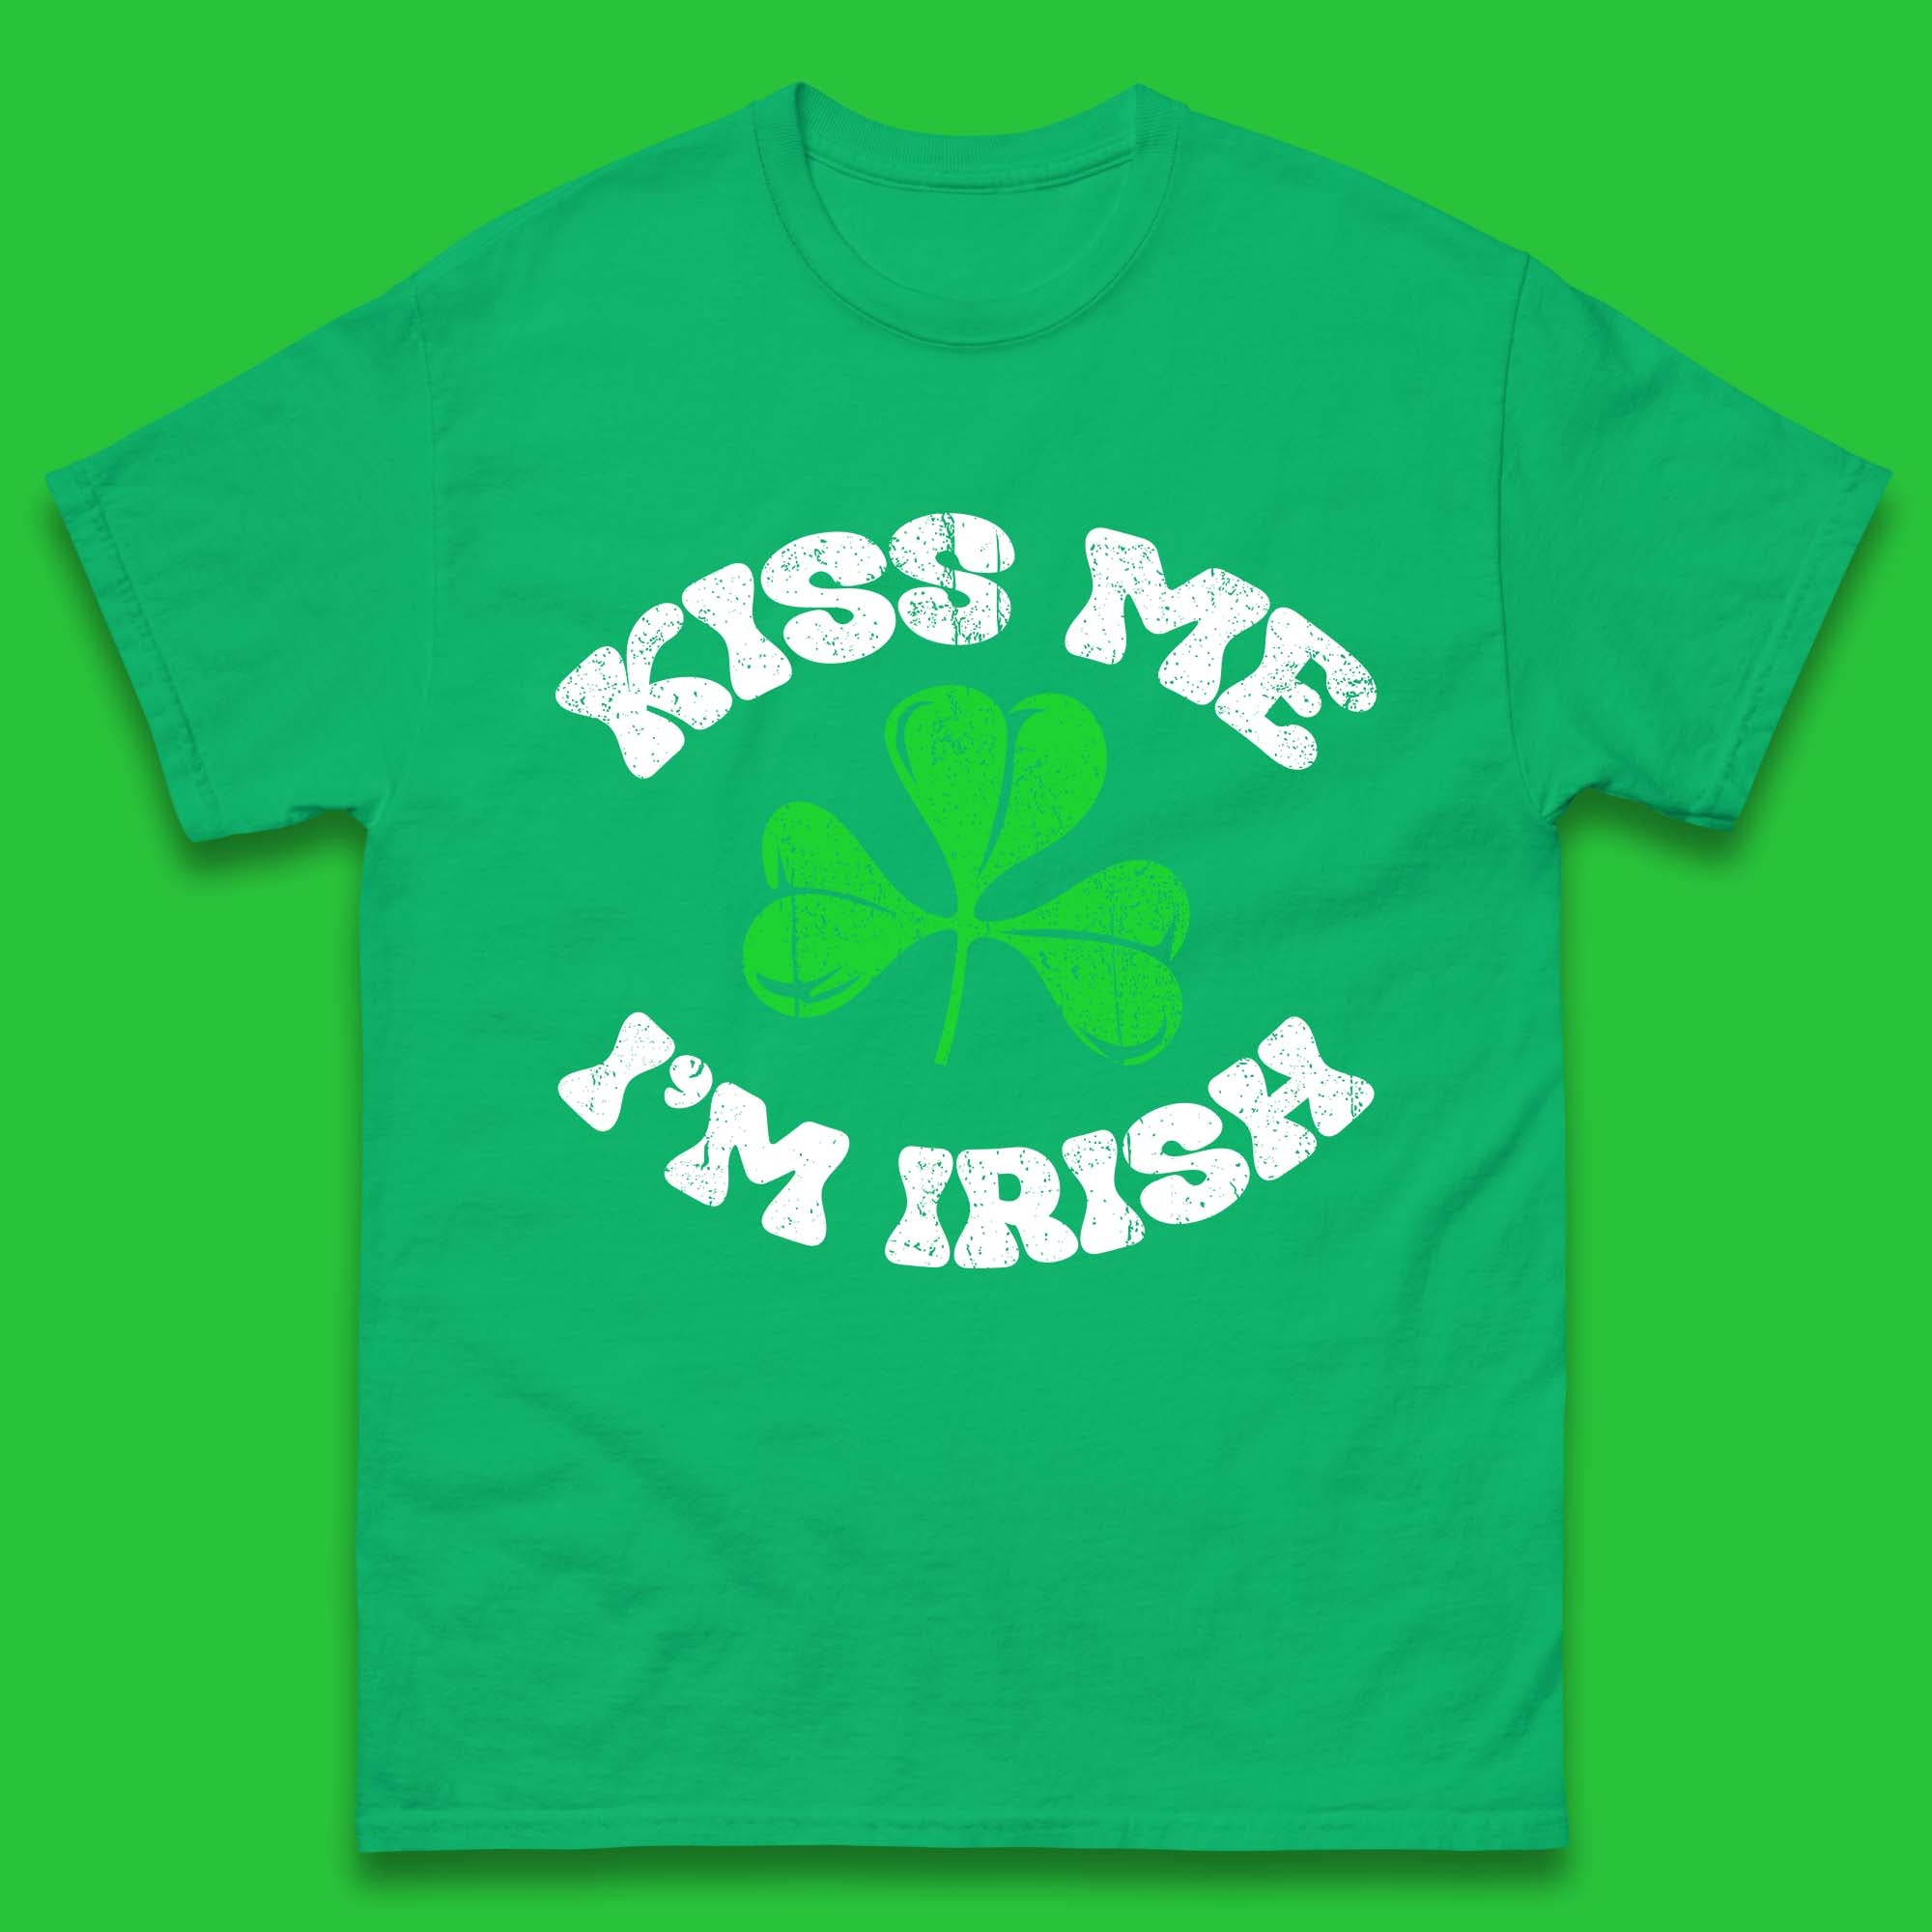 Kiss Me I'm Irish St. Patrick's Day Mens T-Shirt